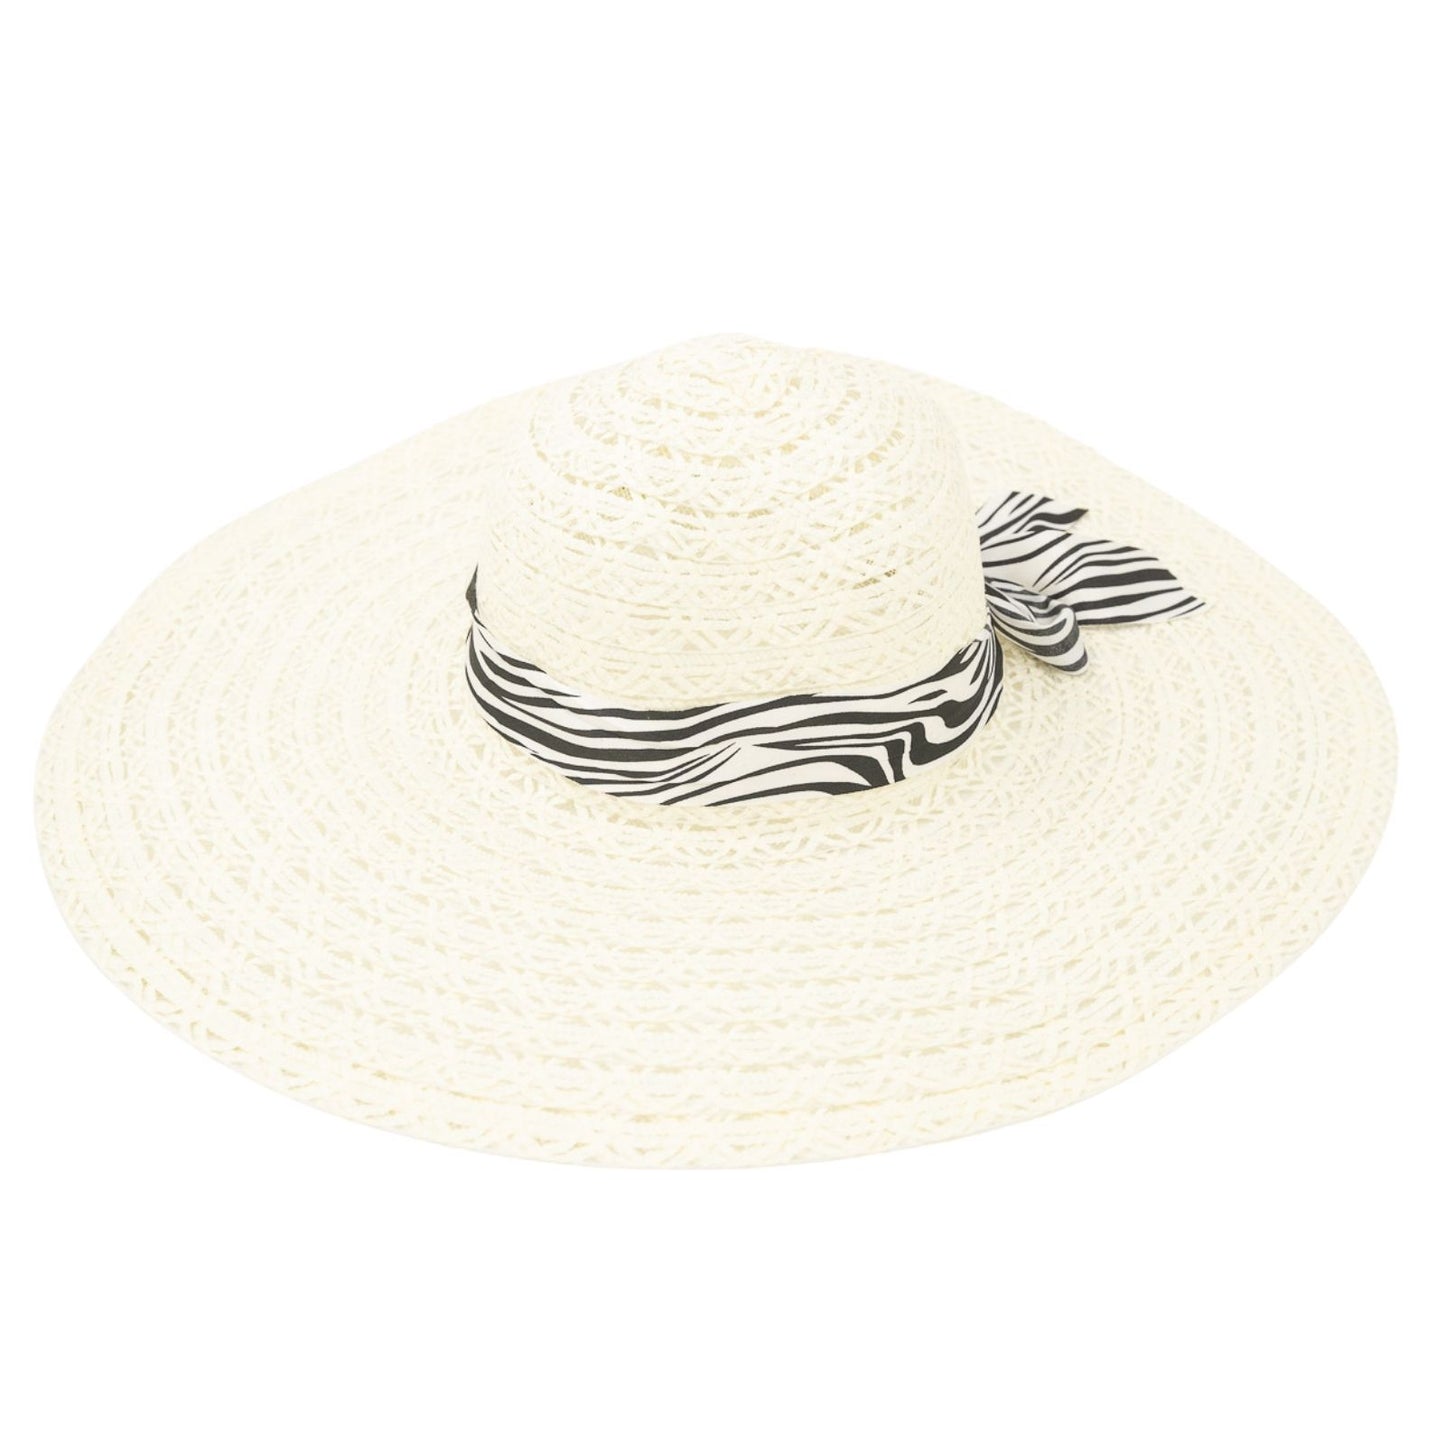 Women's Extra Big Brim Beach Hat - Pantsnsox